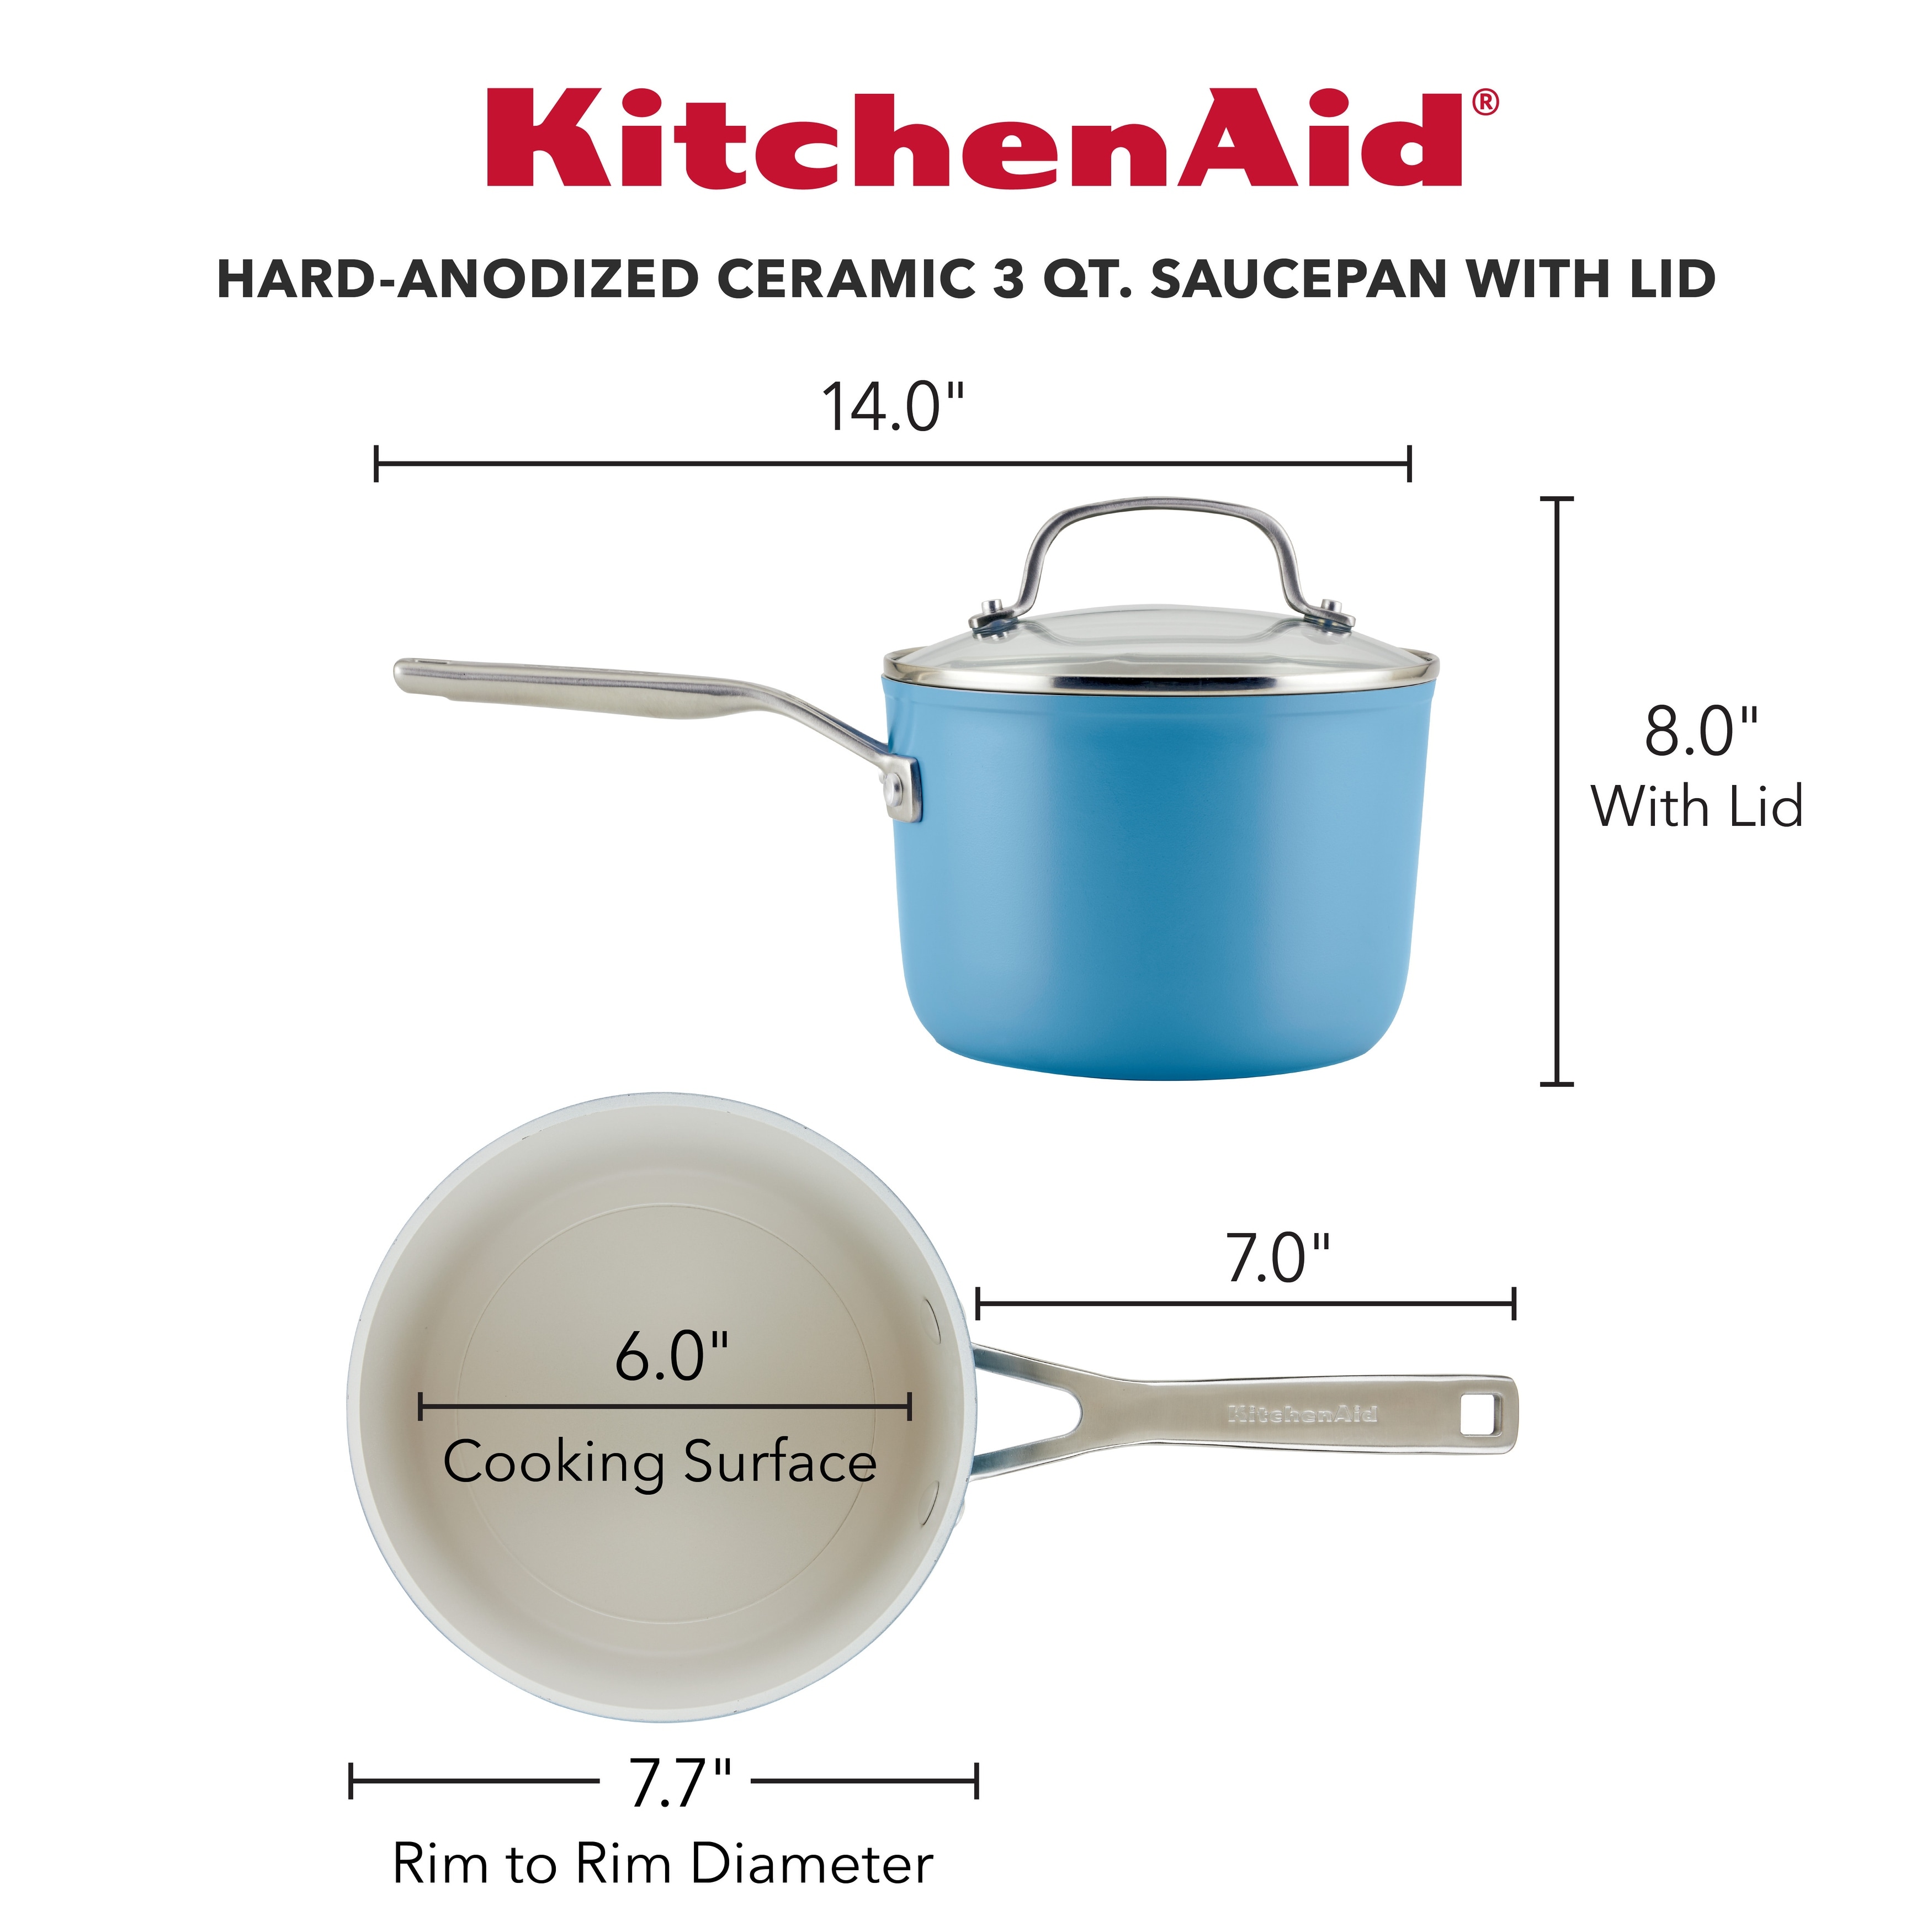 KitchenAid 8-Qt. Hard-Anodized Non-Stick Stock Pot with Lid + Reviews